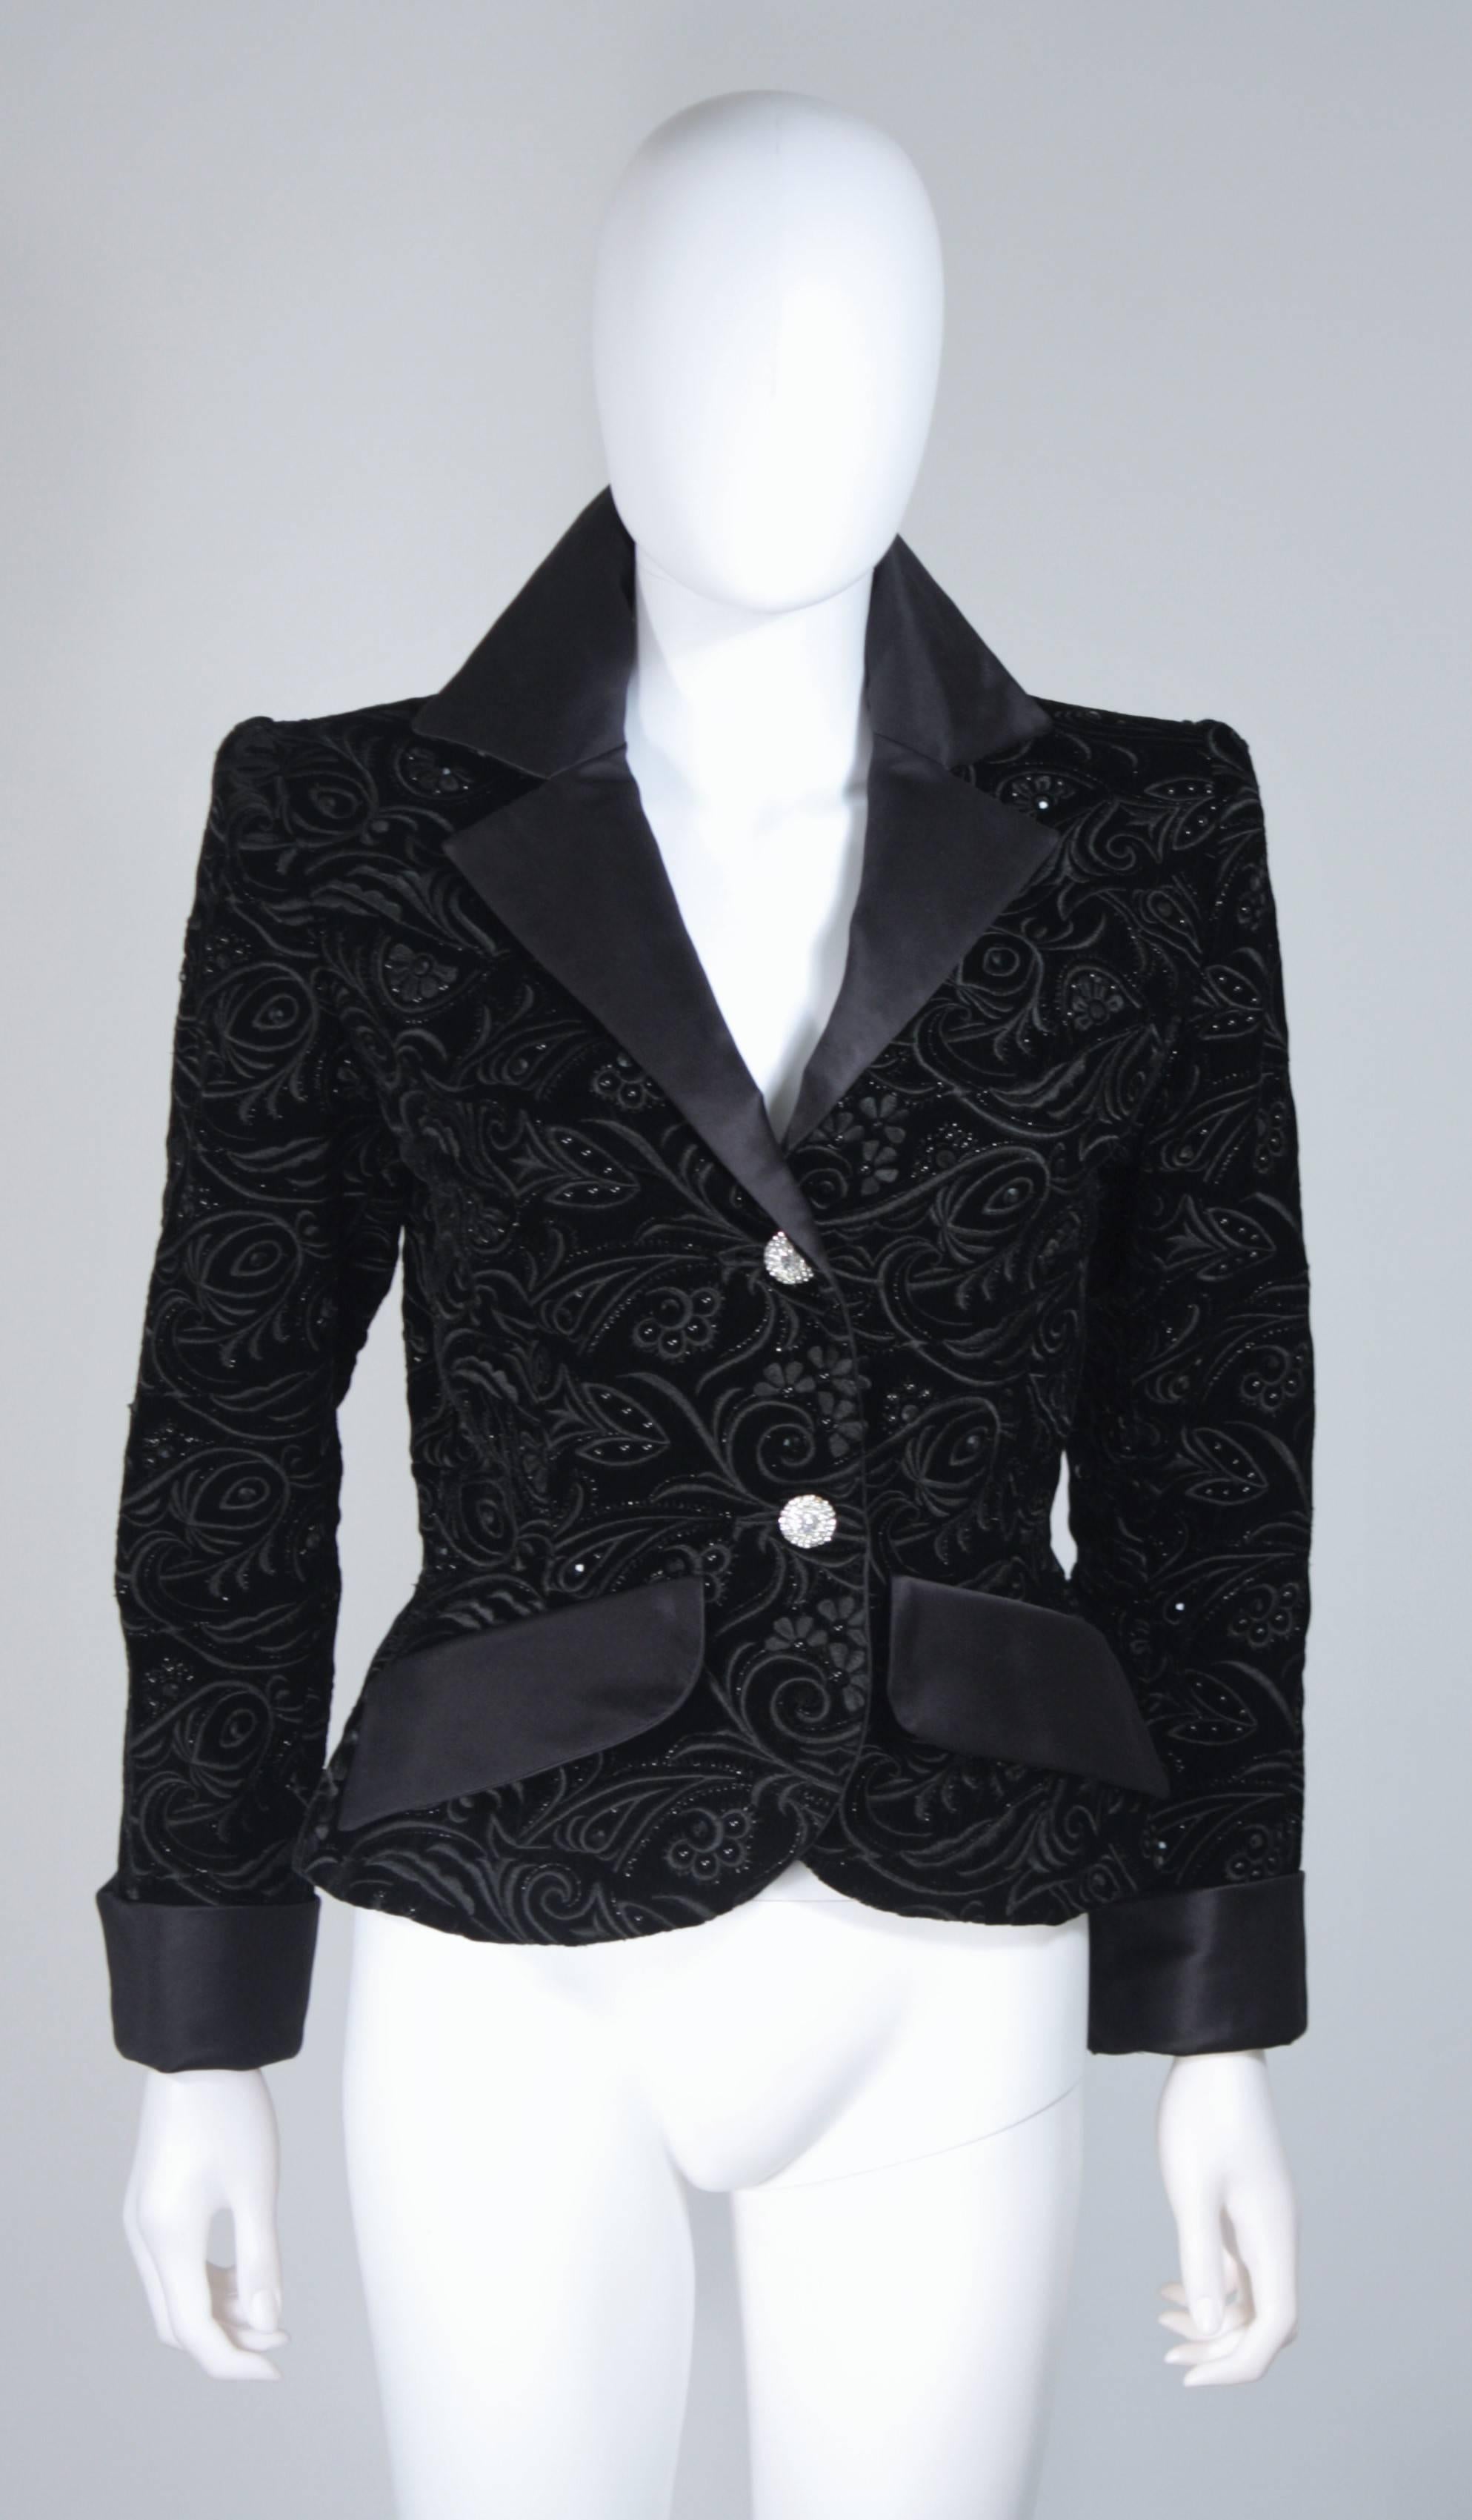 GIVENCHY COUTURE 1980s Black Velvet Floral Embroidered Embellished Suit Size 4-6 3